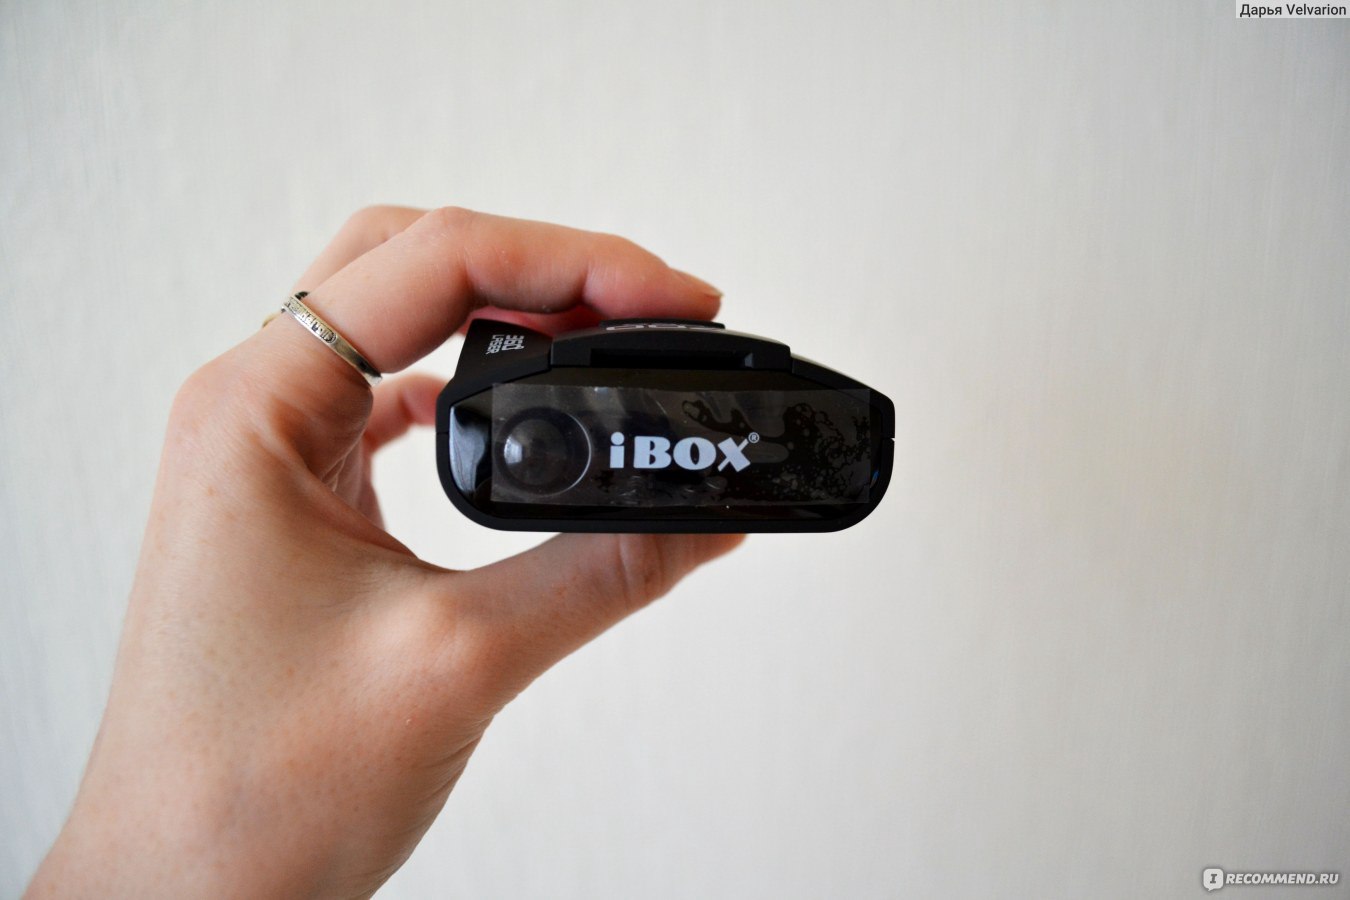 Антирадар ibox pro 700 gps ловит камеру стрелка youtube